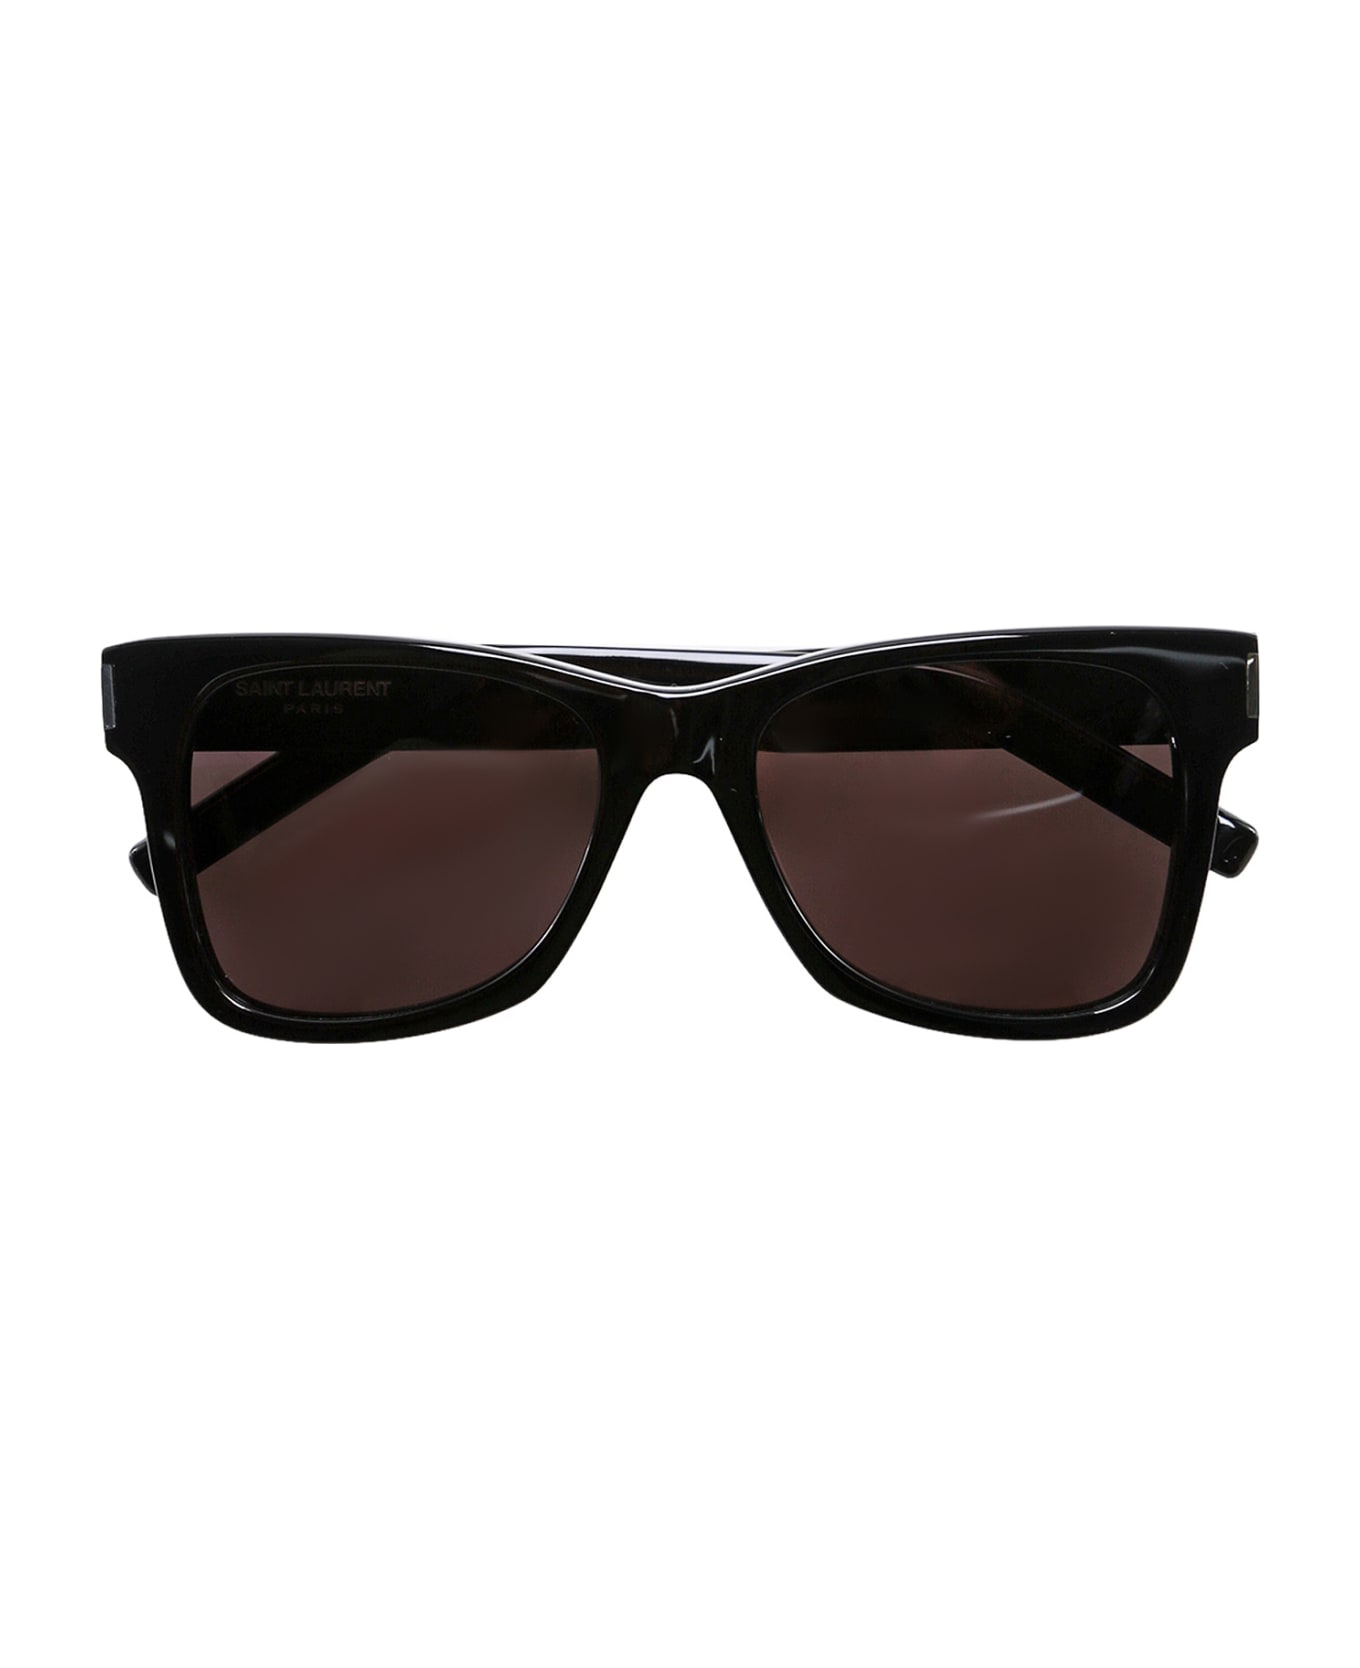 Saint Laurent Sunglasses - Black black black